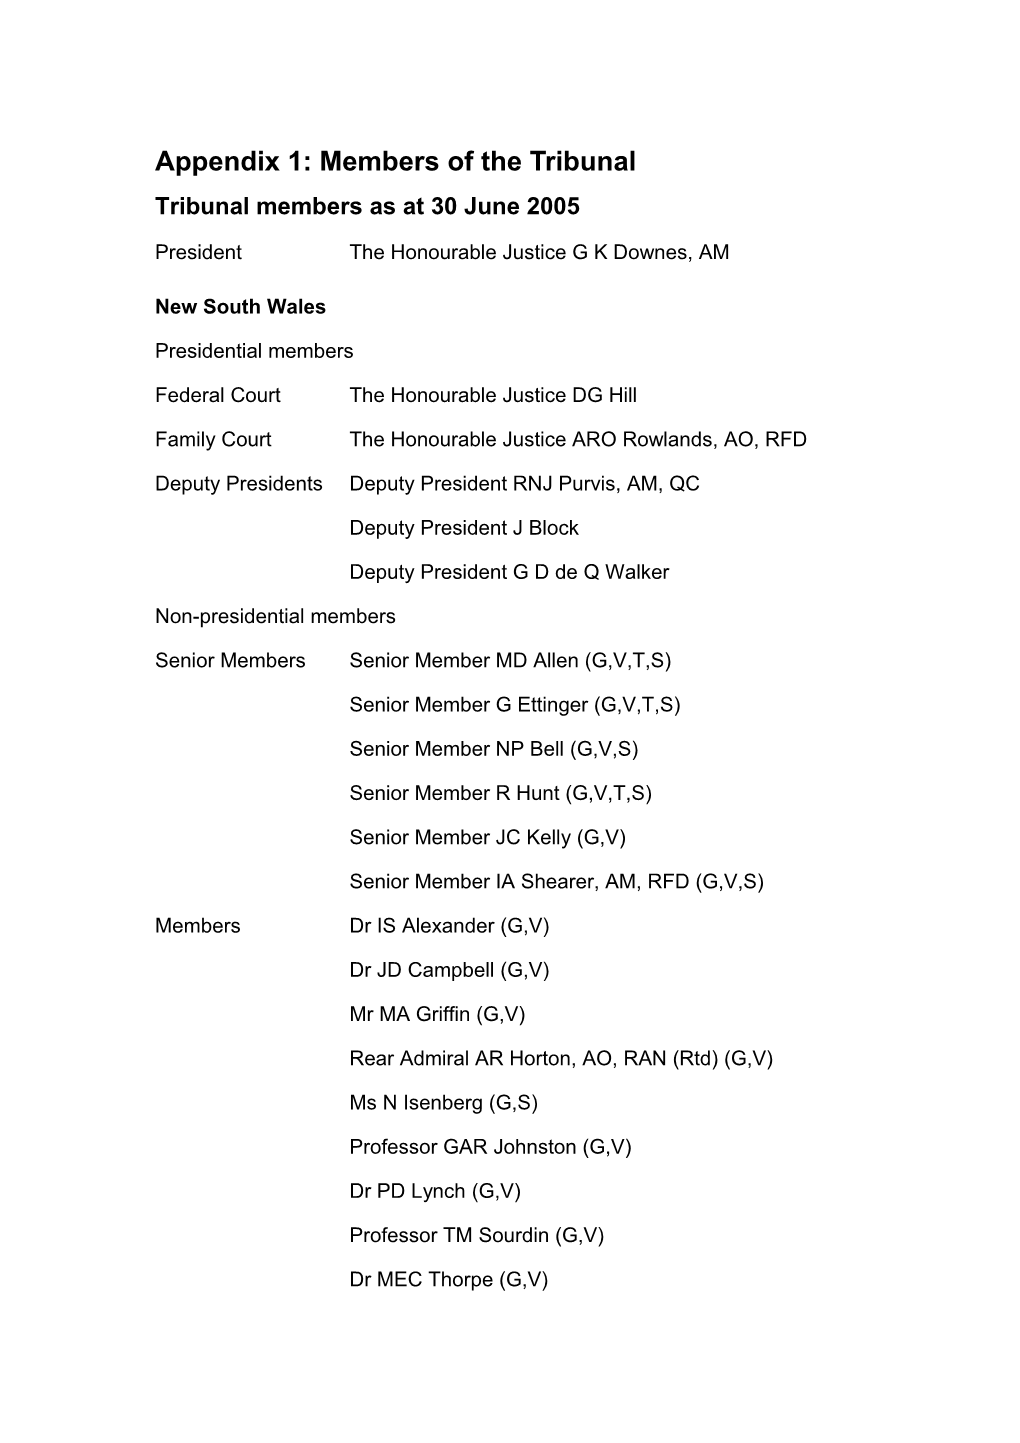 Appendix 1 Members of the Tribunal (Word Version)